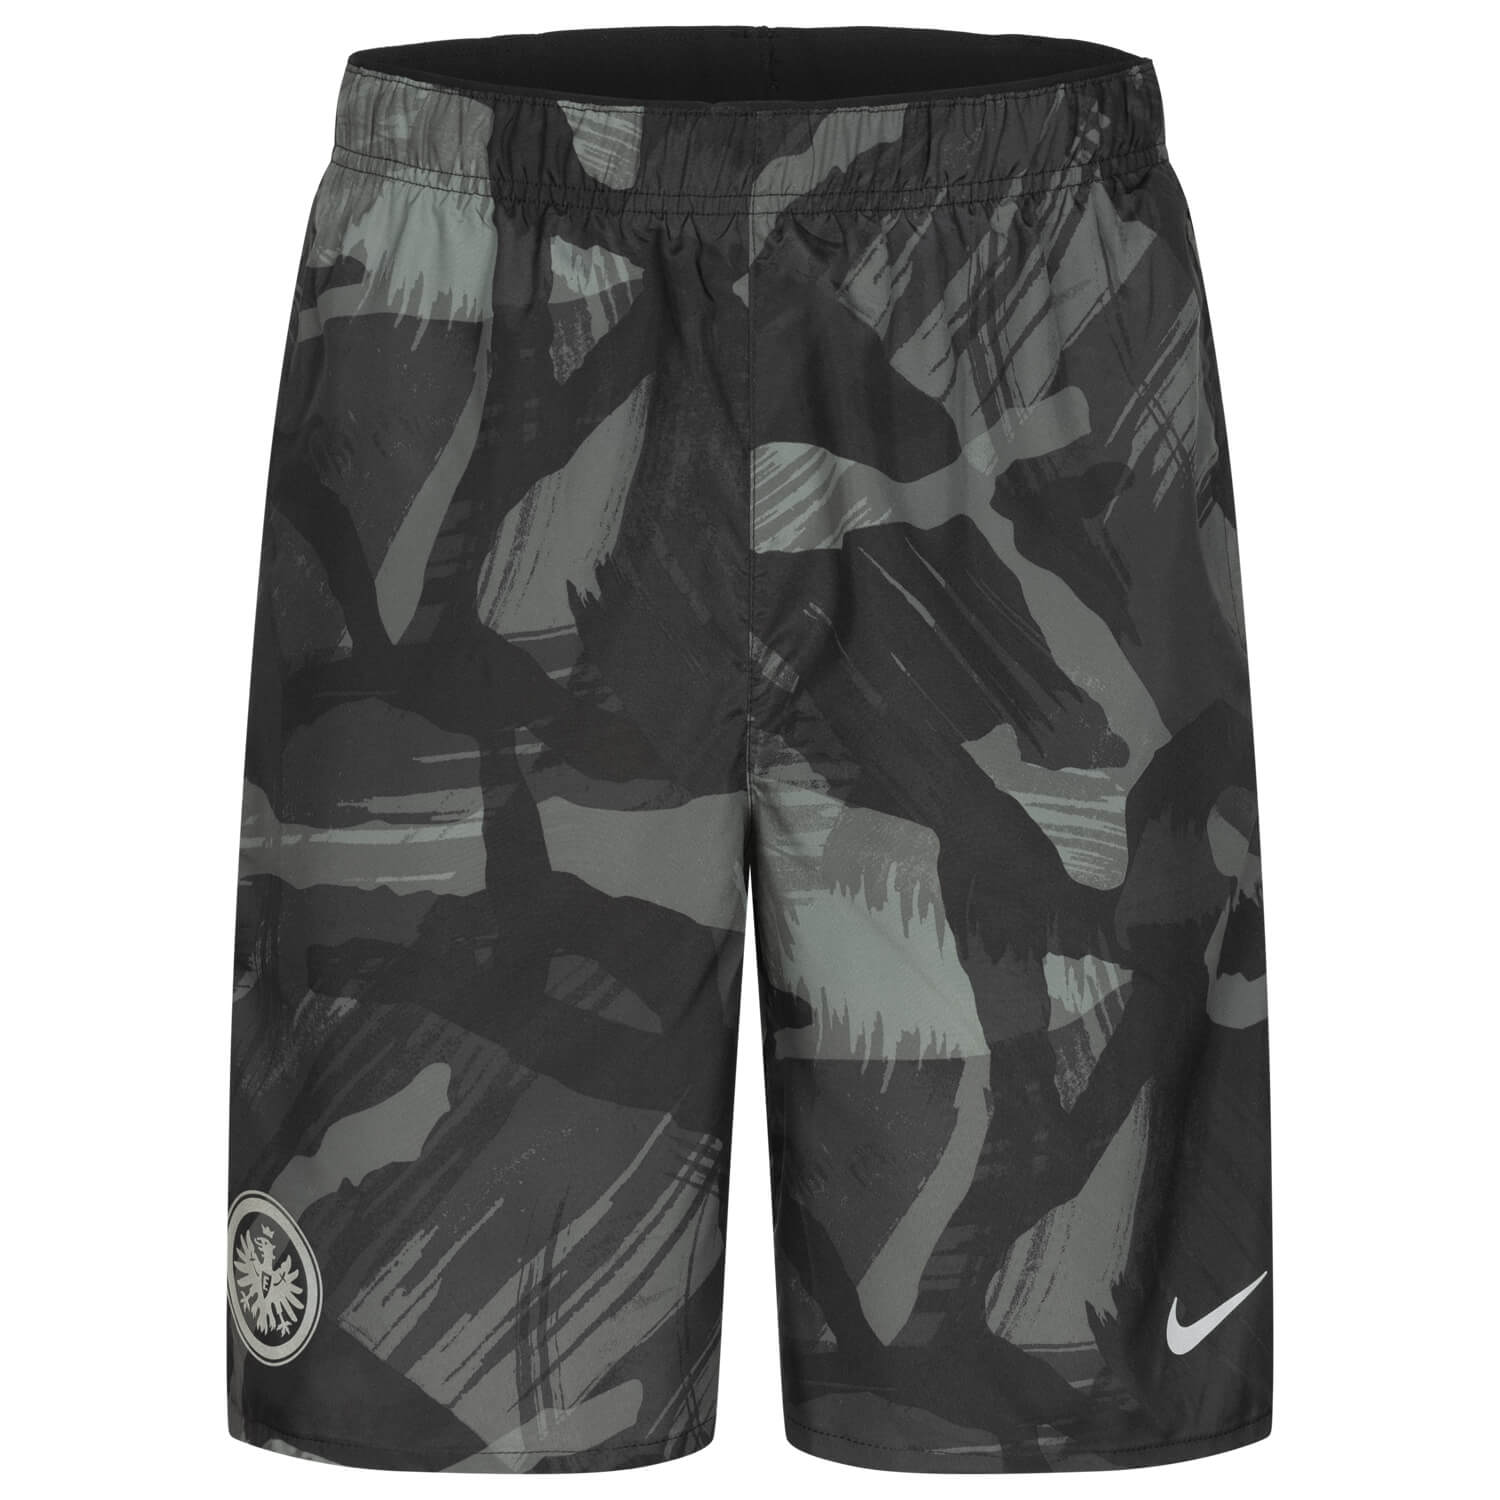 Bild 1: Nike Fitness-Shorts Camou